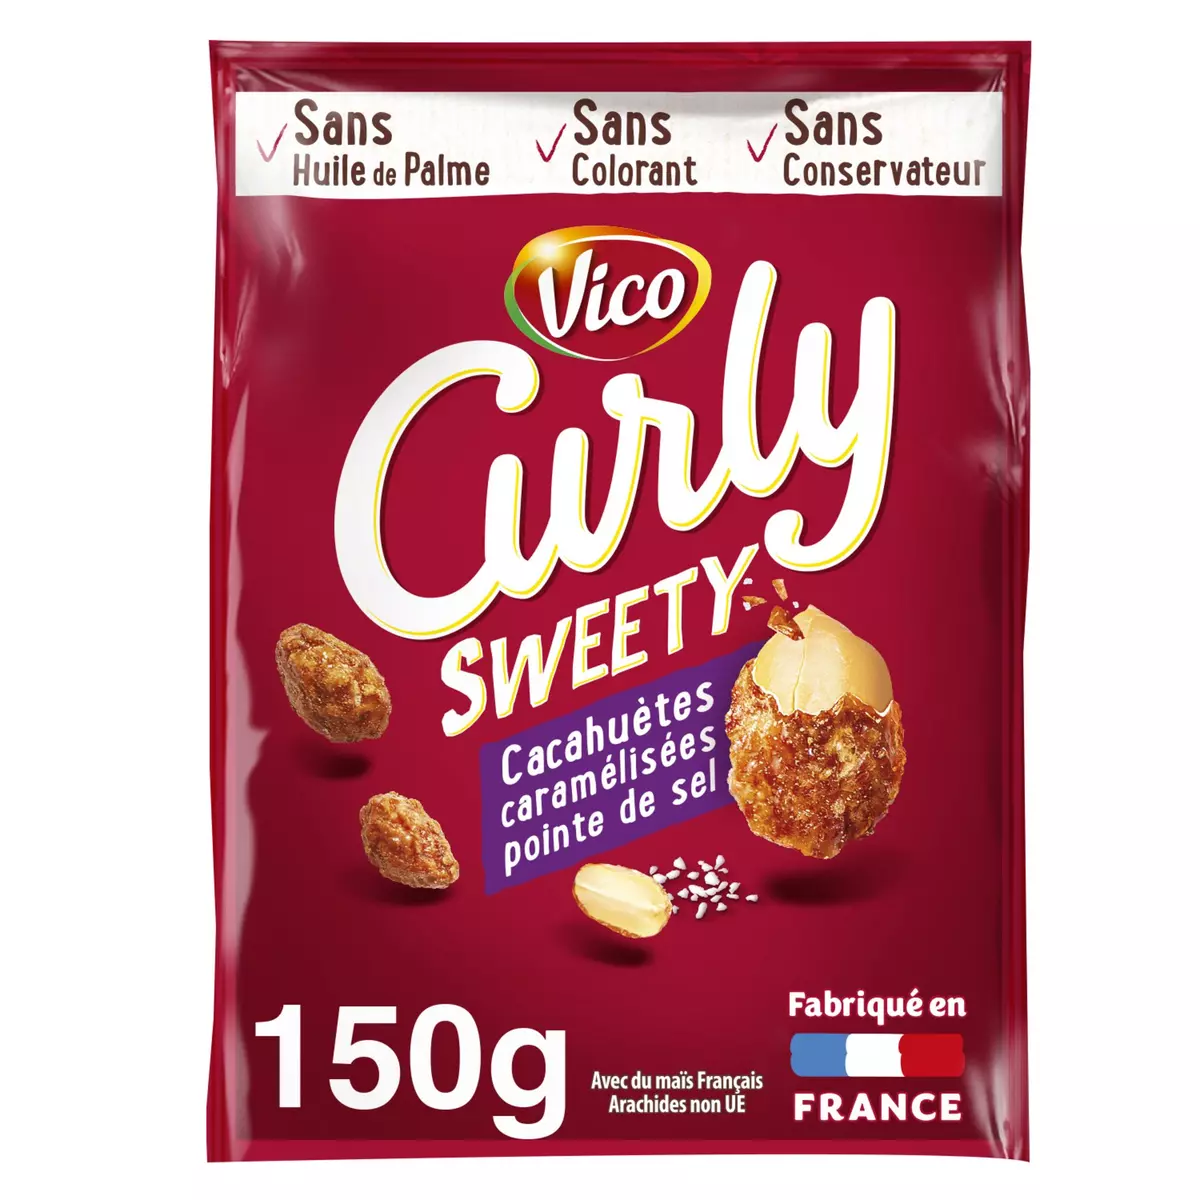 CURLY Sweety Cacahuètes caramélisées pointe de sel 150g